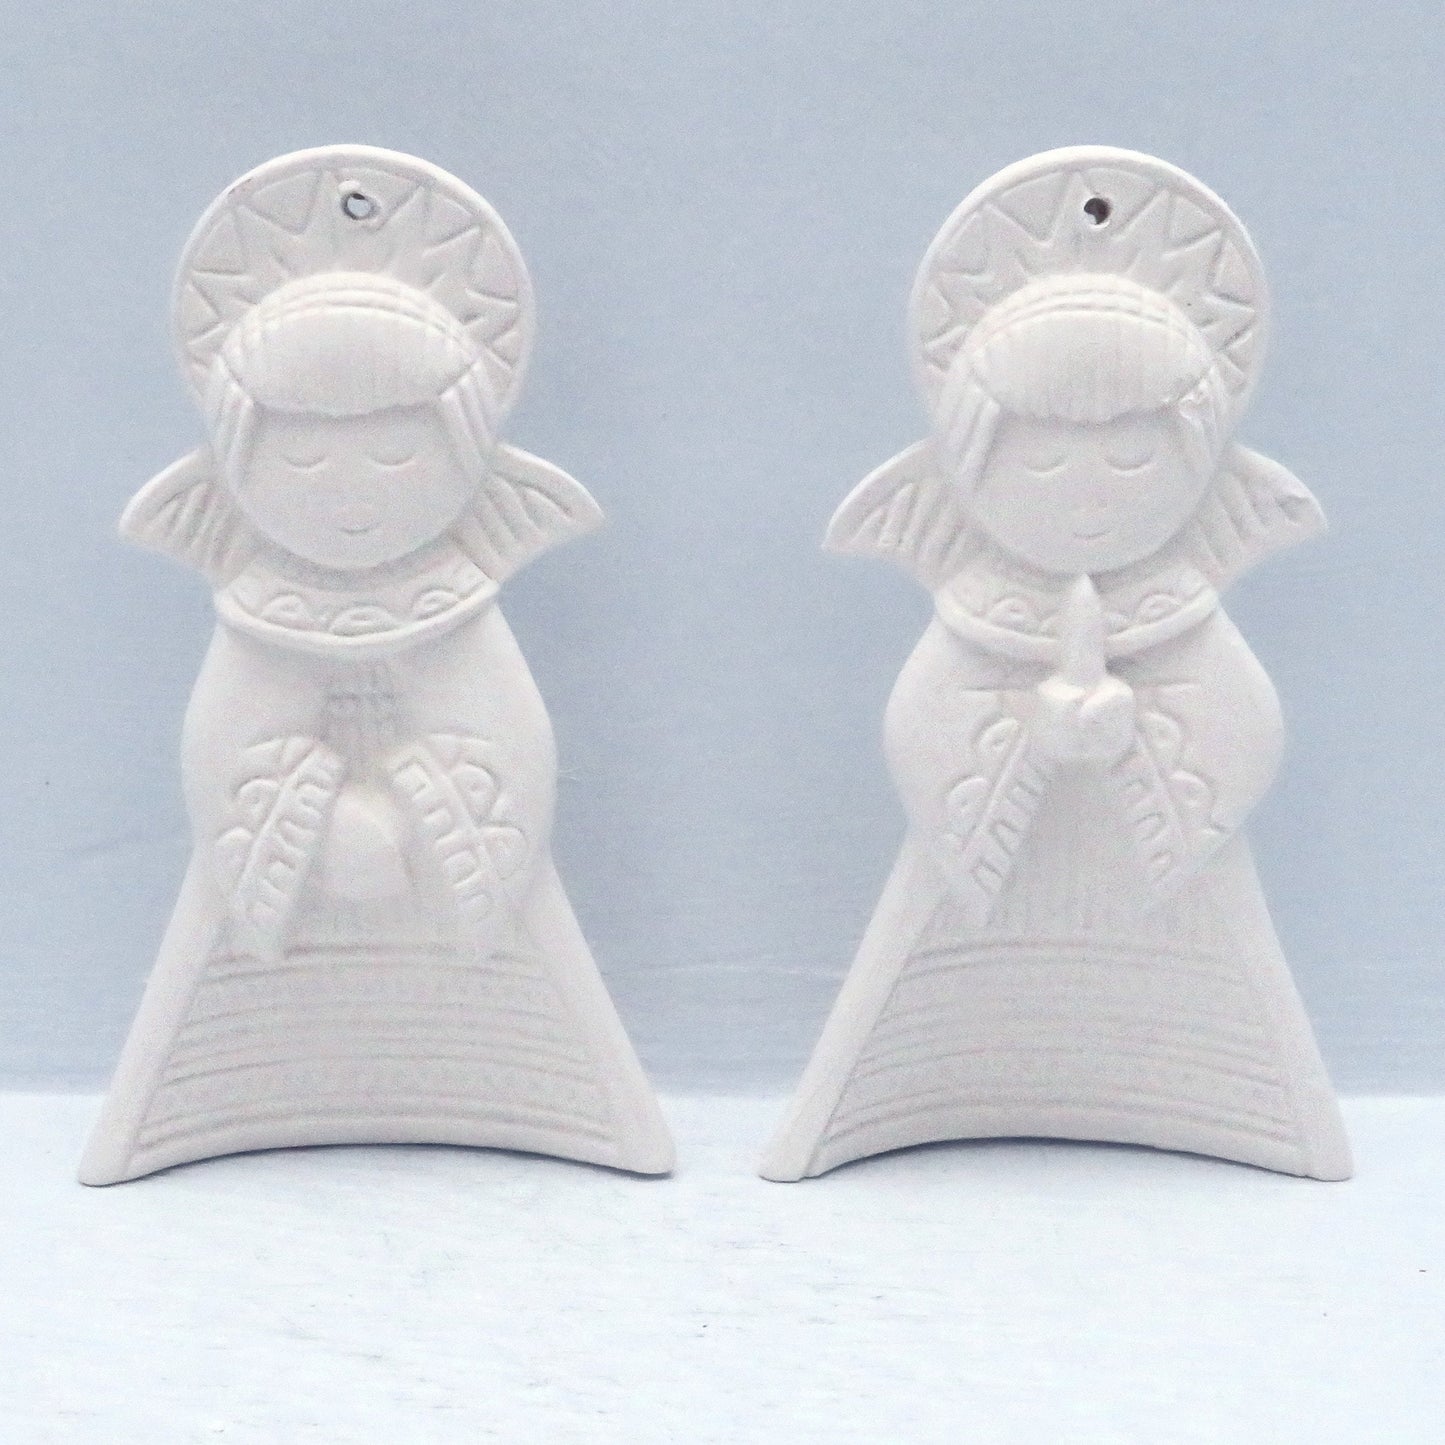 Handmade Unpainted Ceramic Angel Ornament / Angel Pendant / Angel Decorations / Angel Lover Gift / Christmas Tree Ornament / Ready to Paint